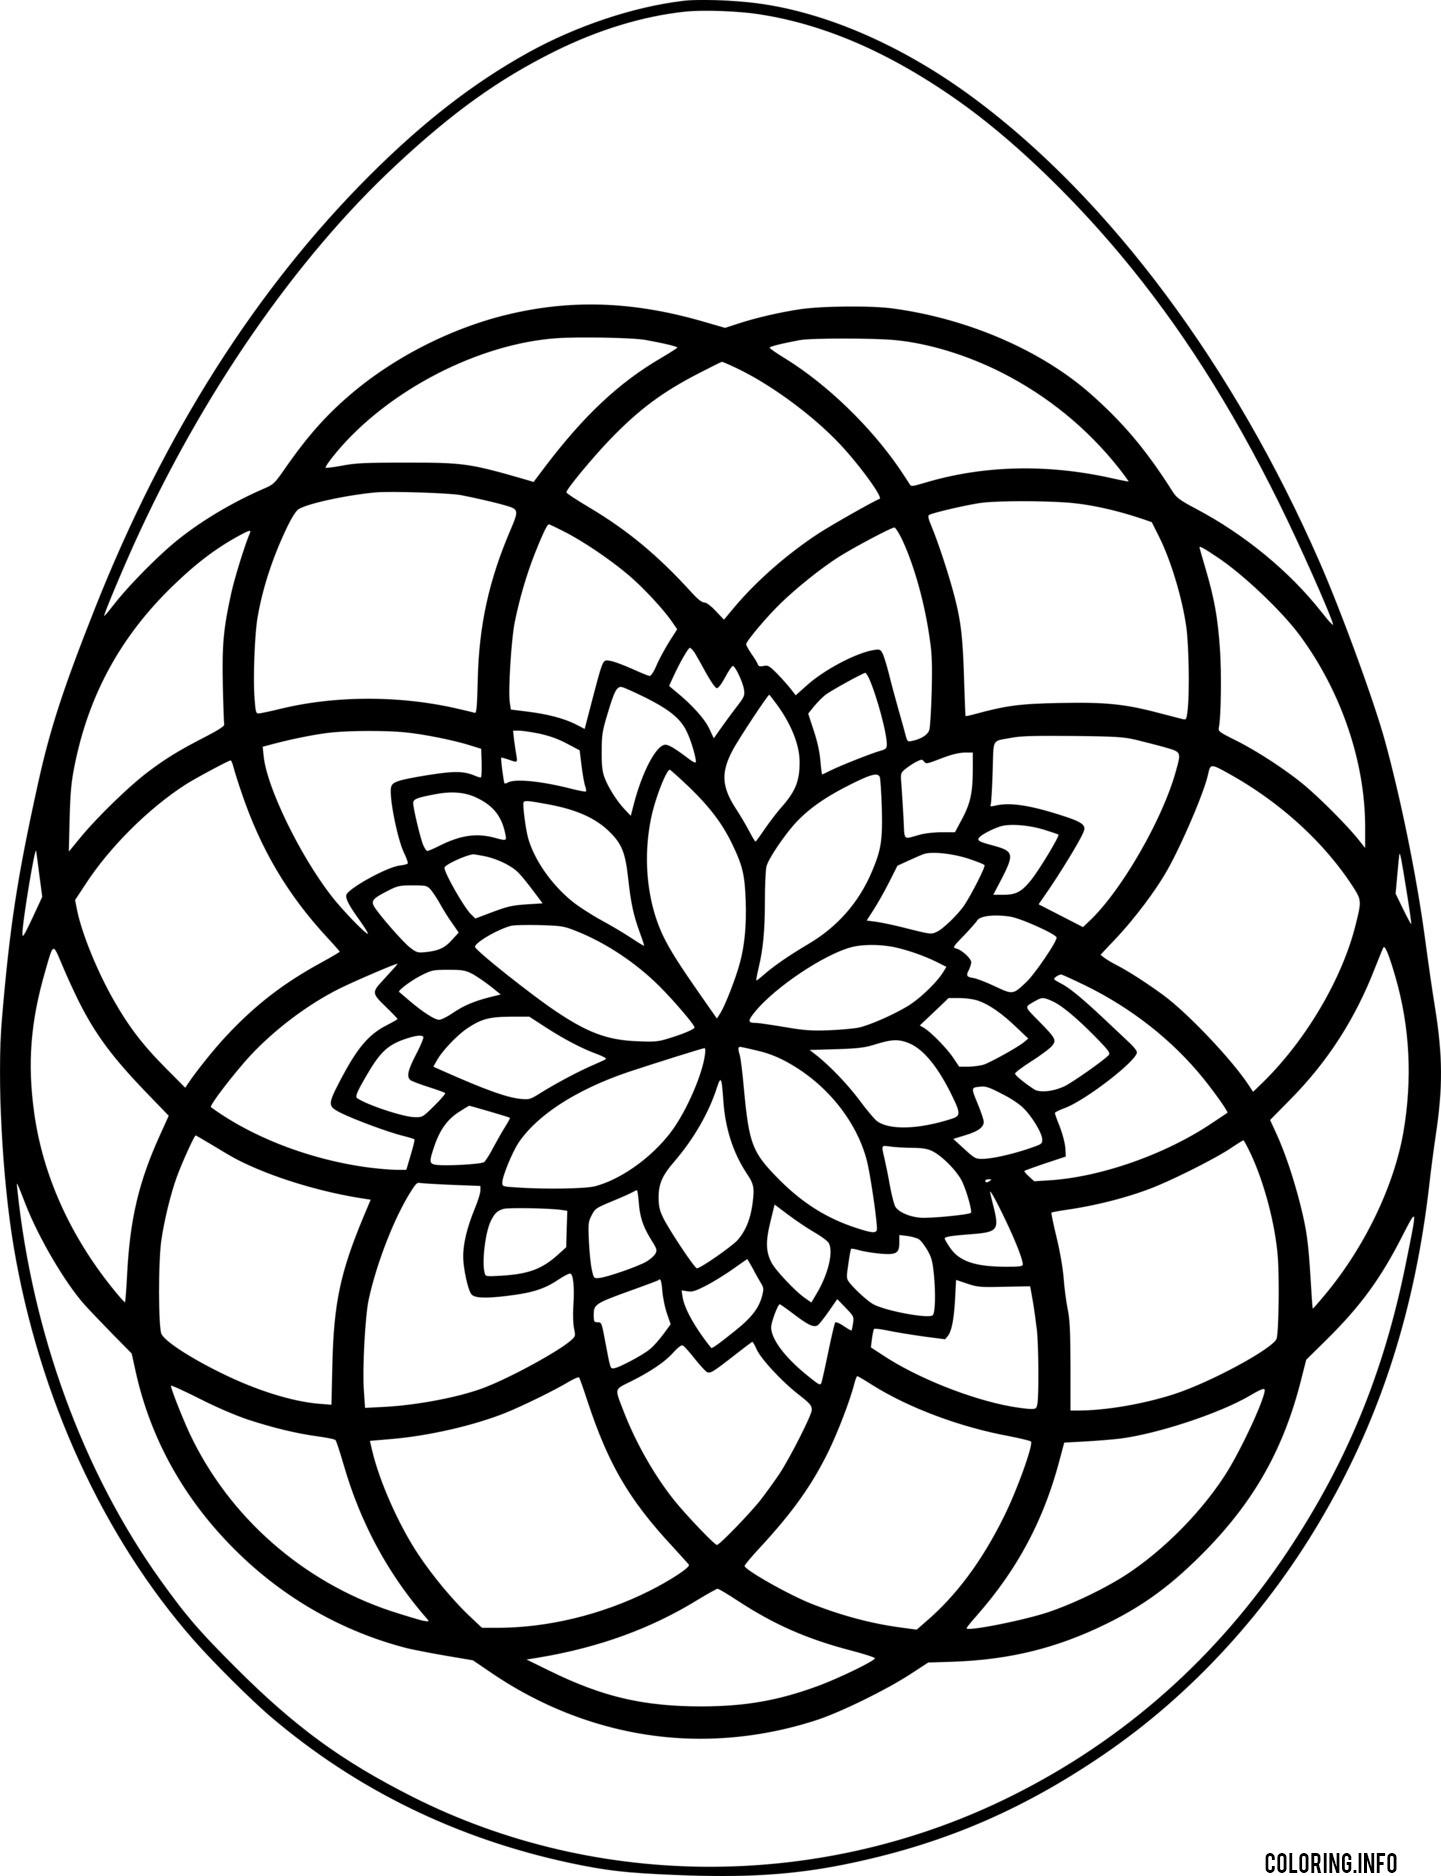 Symmetrical Pattern Easter Egg coloring